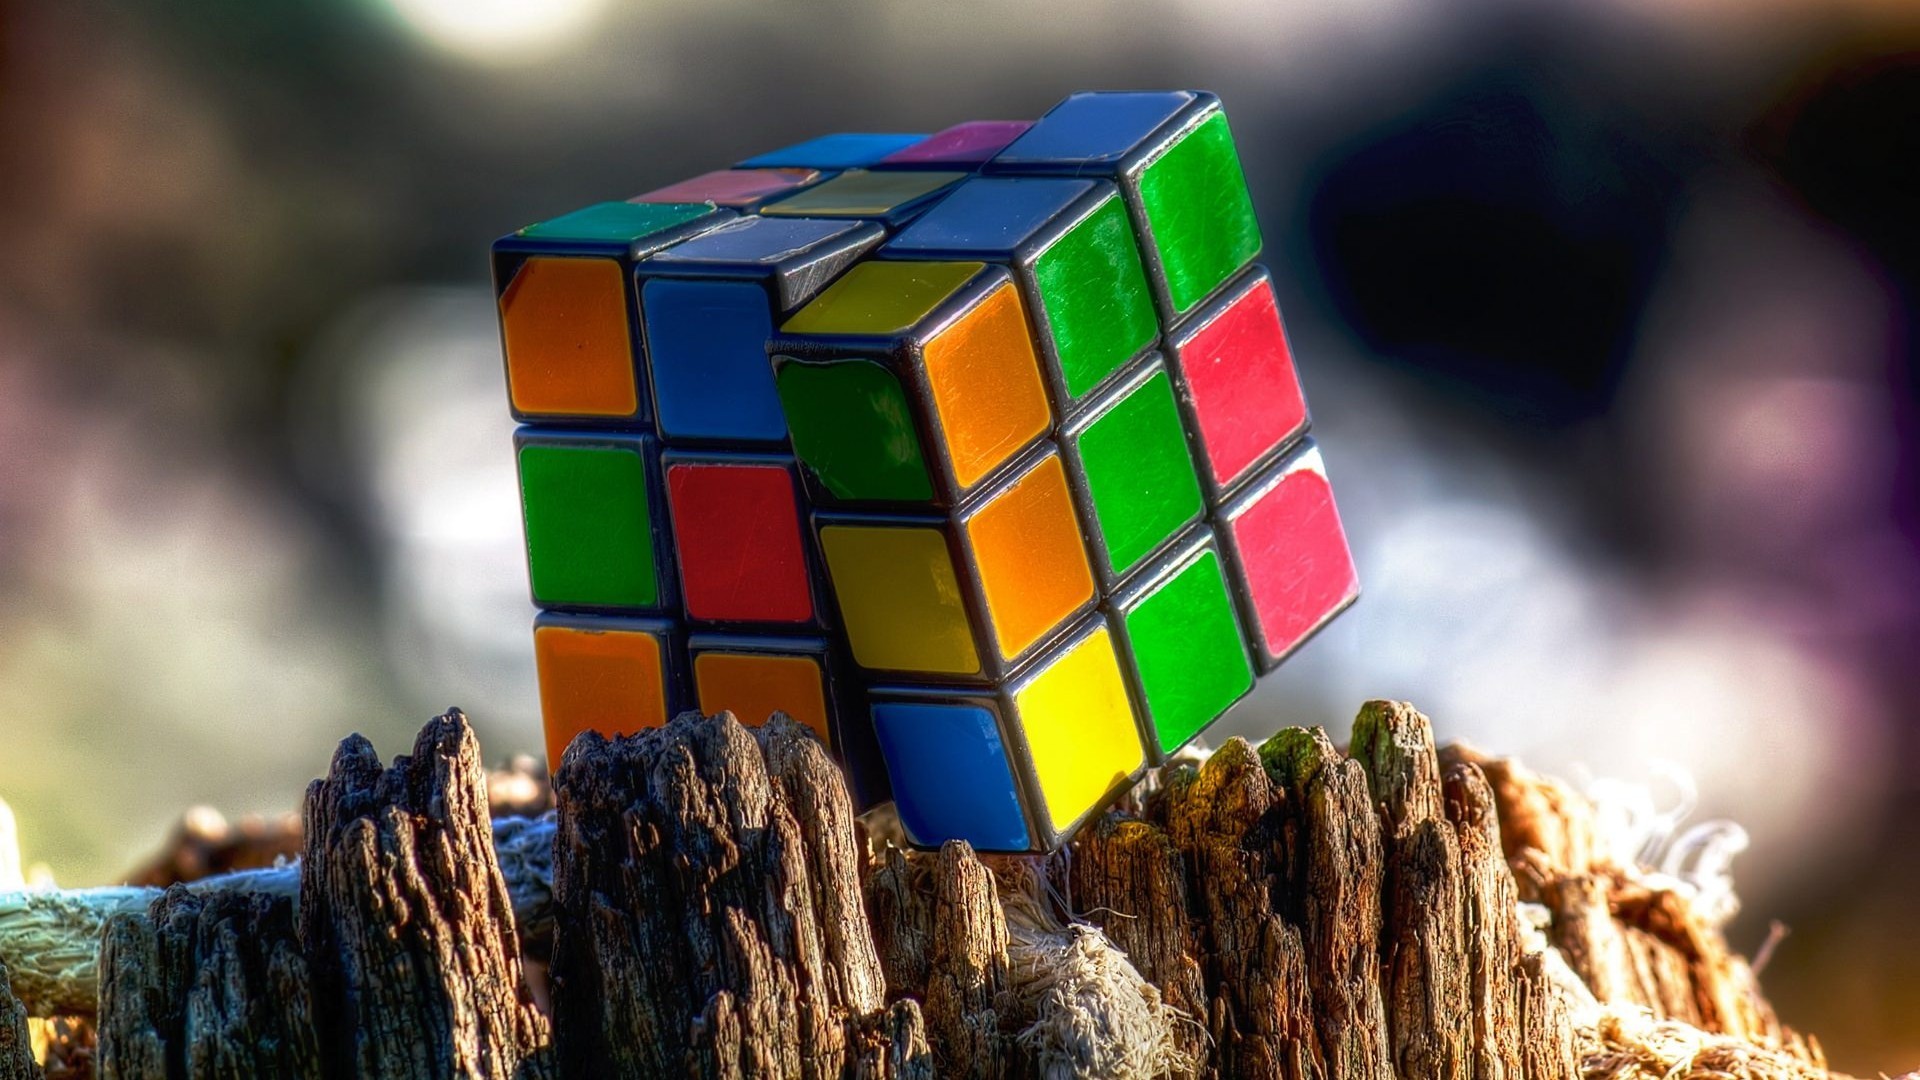 General 1920x1080 Rubik's Cube colorful toys 3D Blocks wood outdoors